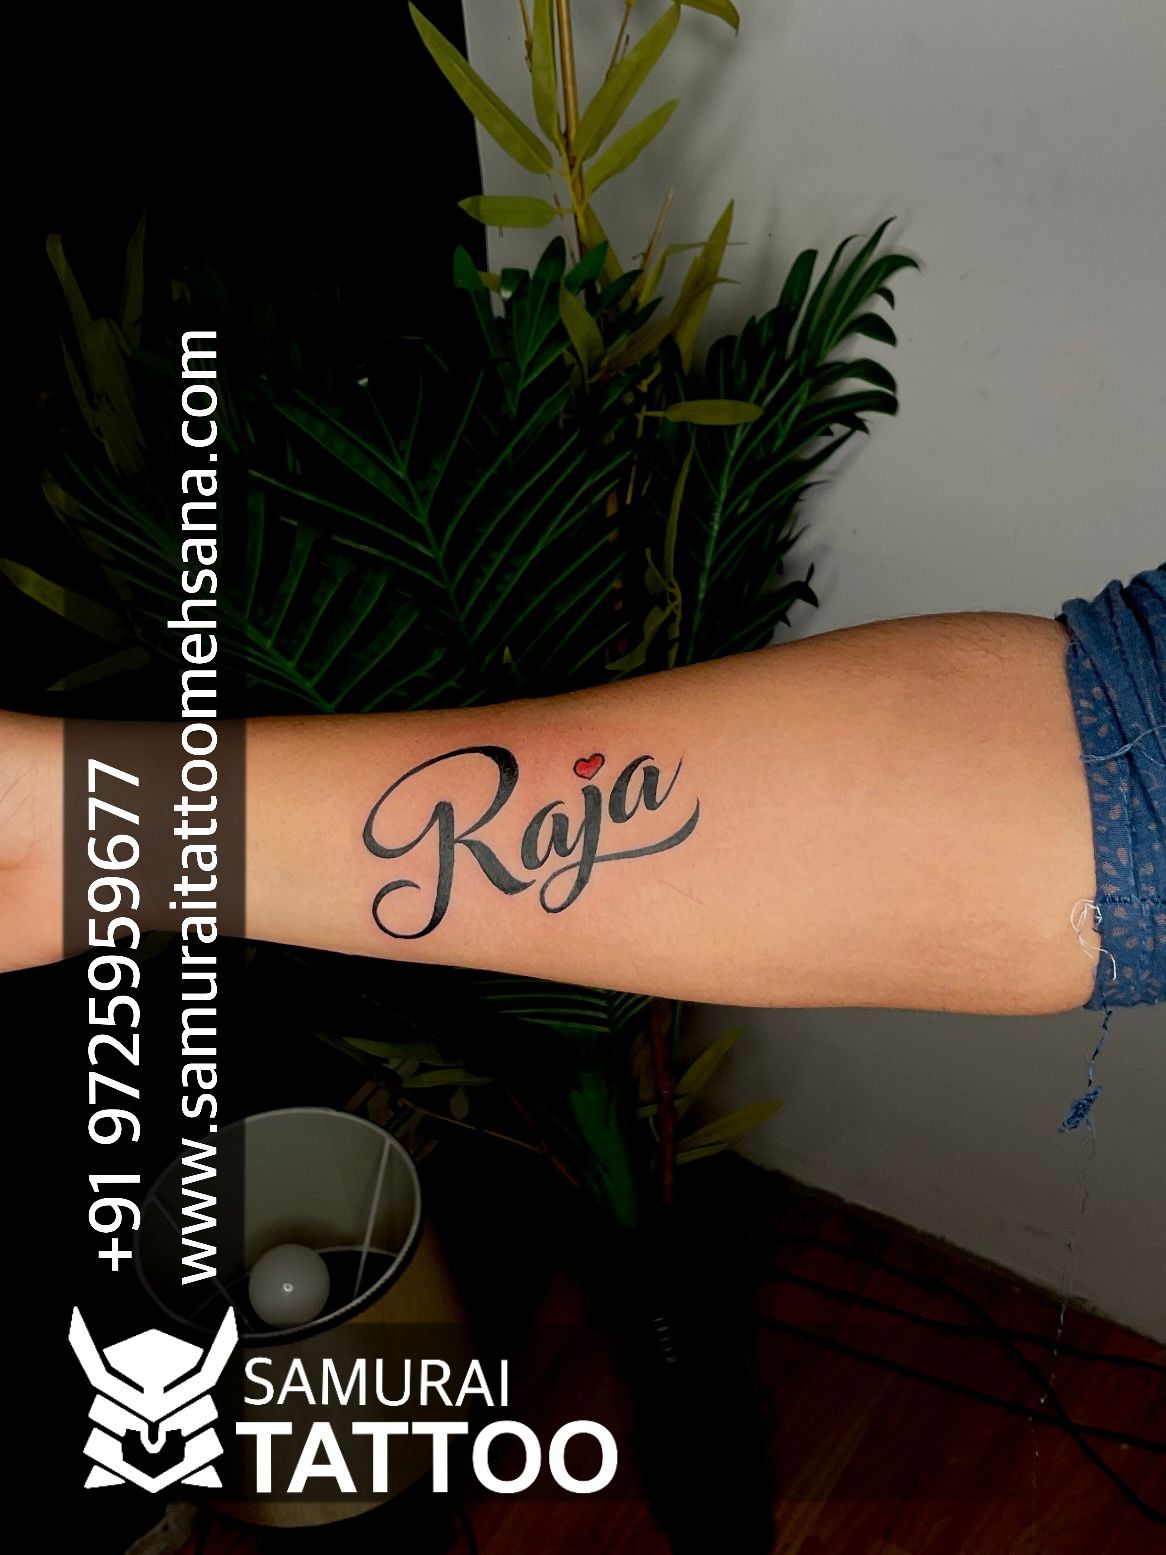 Tattoo uploaded by Vipul Chaudhary  Raja name tattoo  Raja tattoo  Raja name  tattoo design  Tattoodo